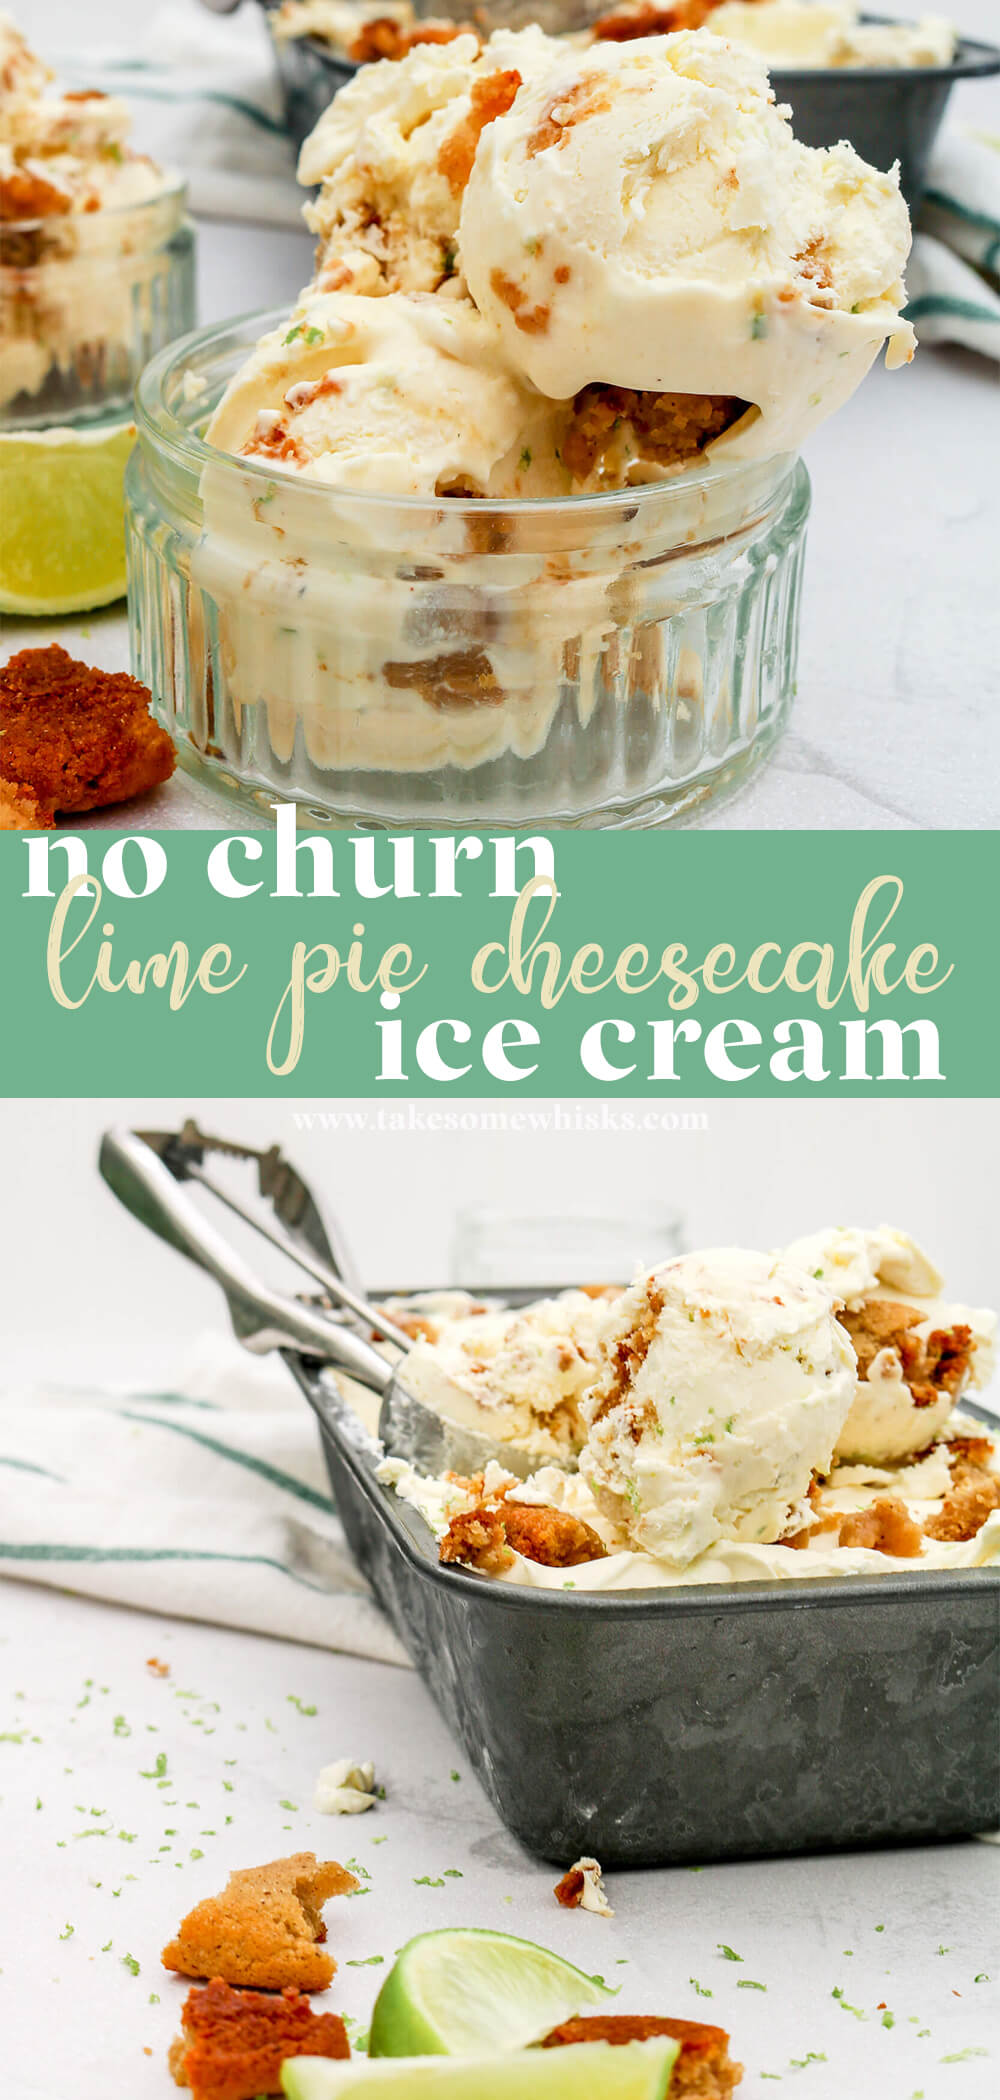 No Churn Lime Pie Cheesecake Ice Cream | Take Some Whisks